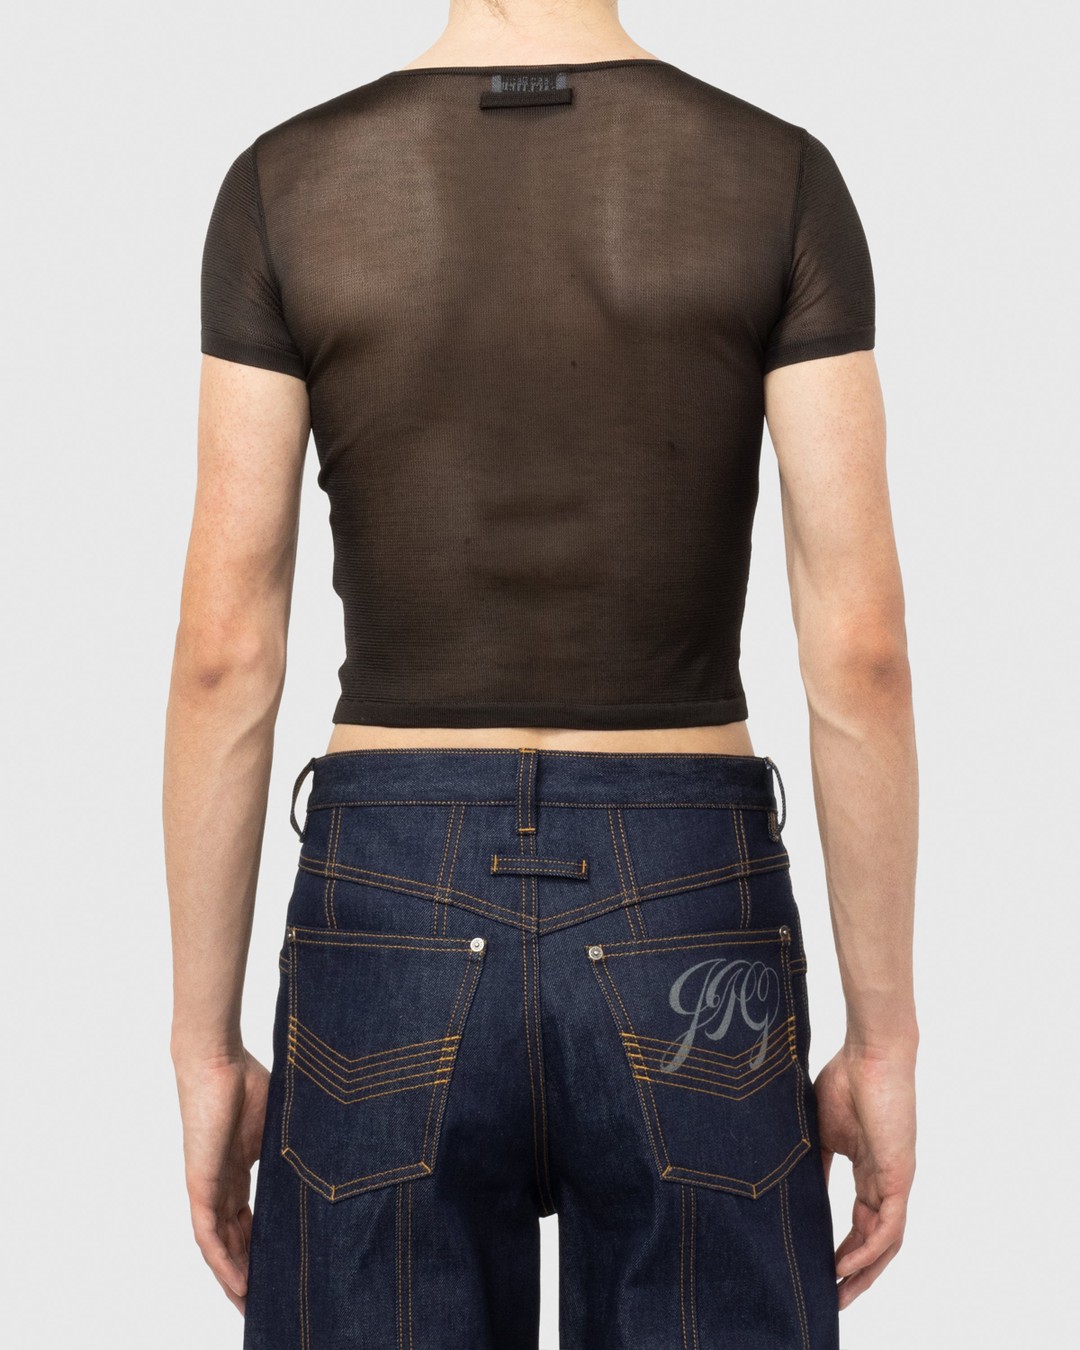 Jean Paul Gaultier – Open-Worked JPG Heart T-Shirt Dark Brown - T-shirts - Brown - Image 2